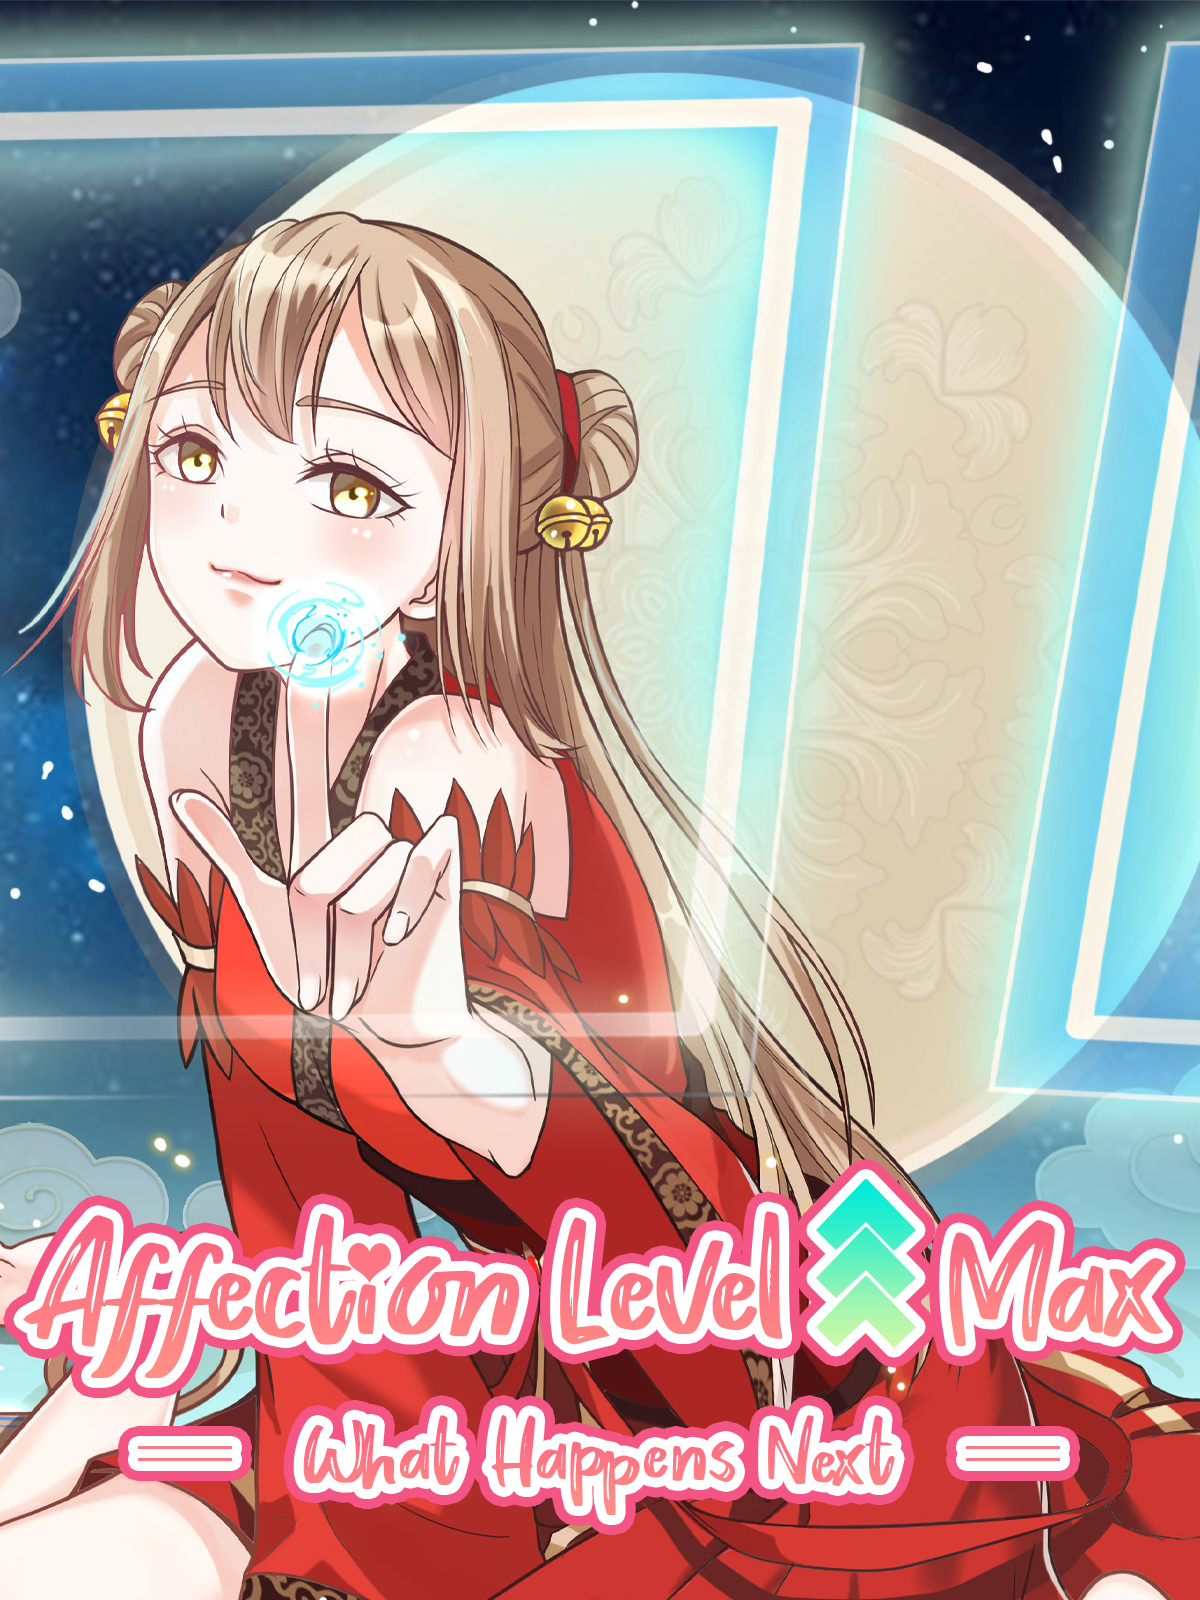 Read Max Level Player Chapter 0 on Mangakakalot